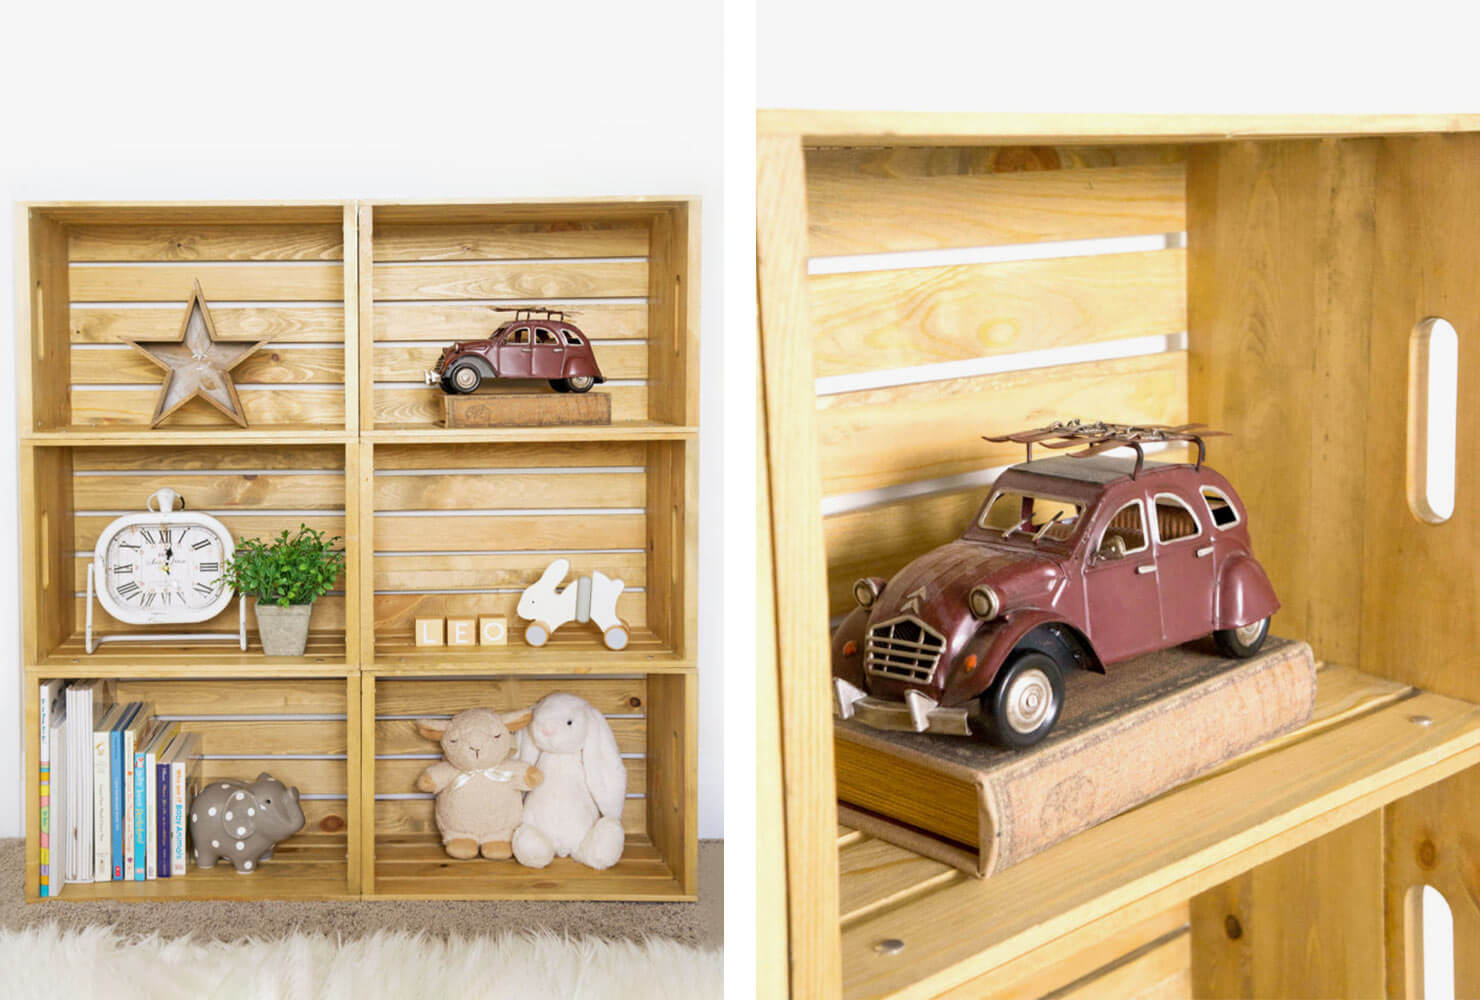 nursery room ideas wooden crates.